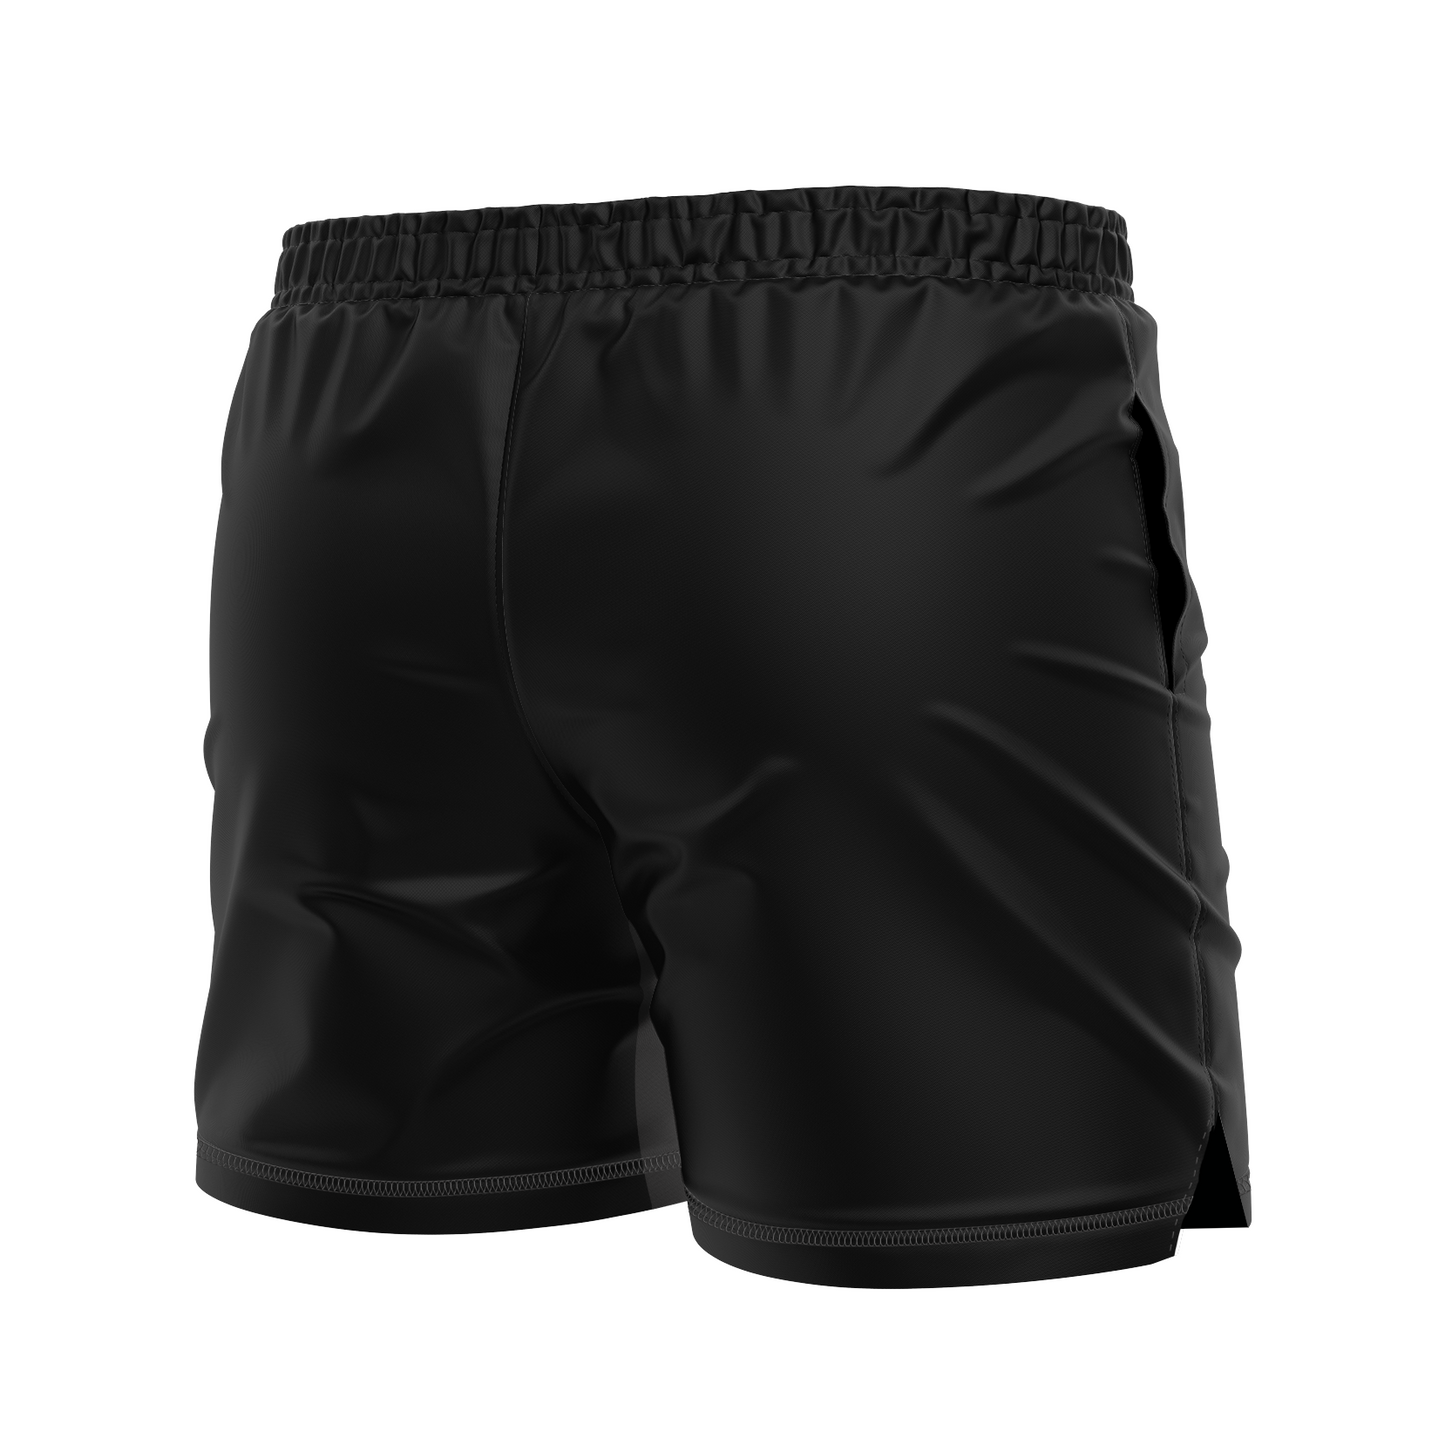 Tracker men's FC shorts, black / red / gold / green